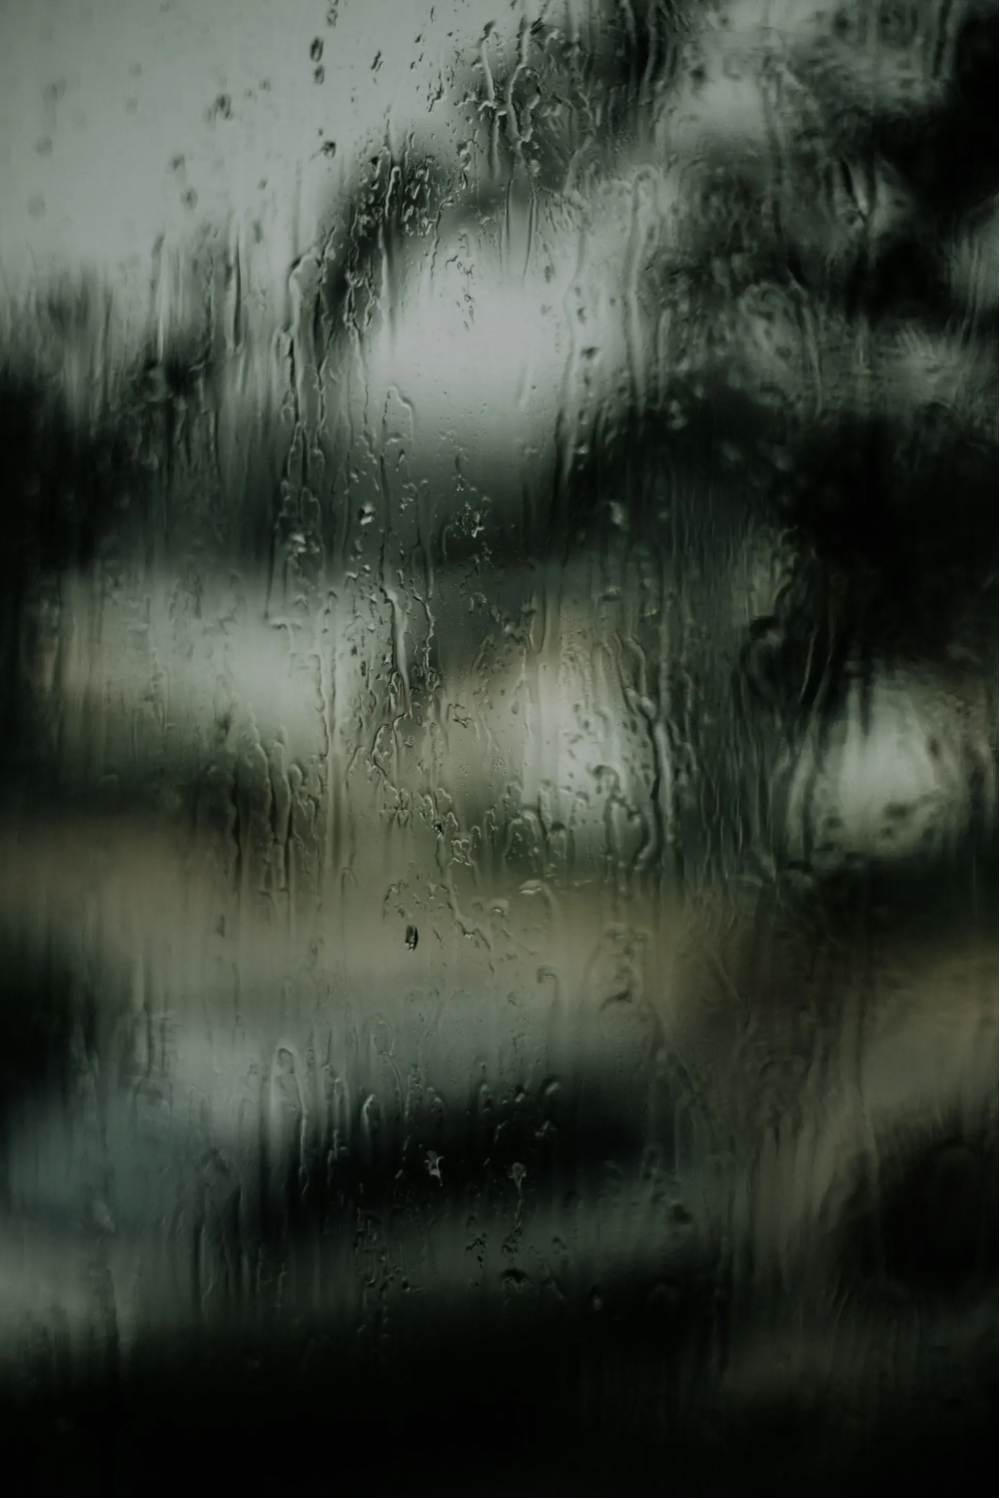 Raindrops running down a window